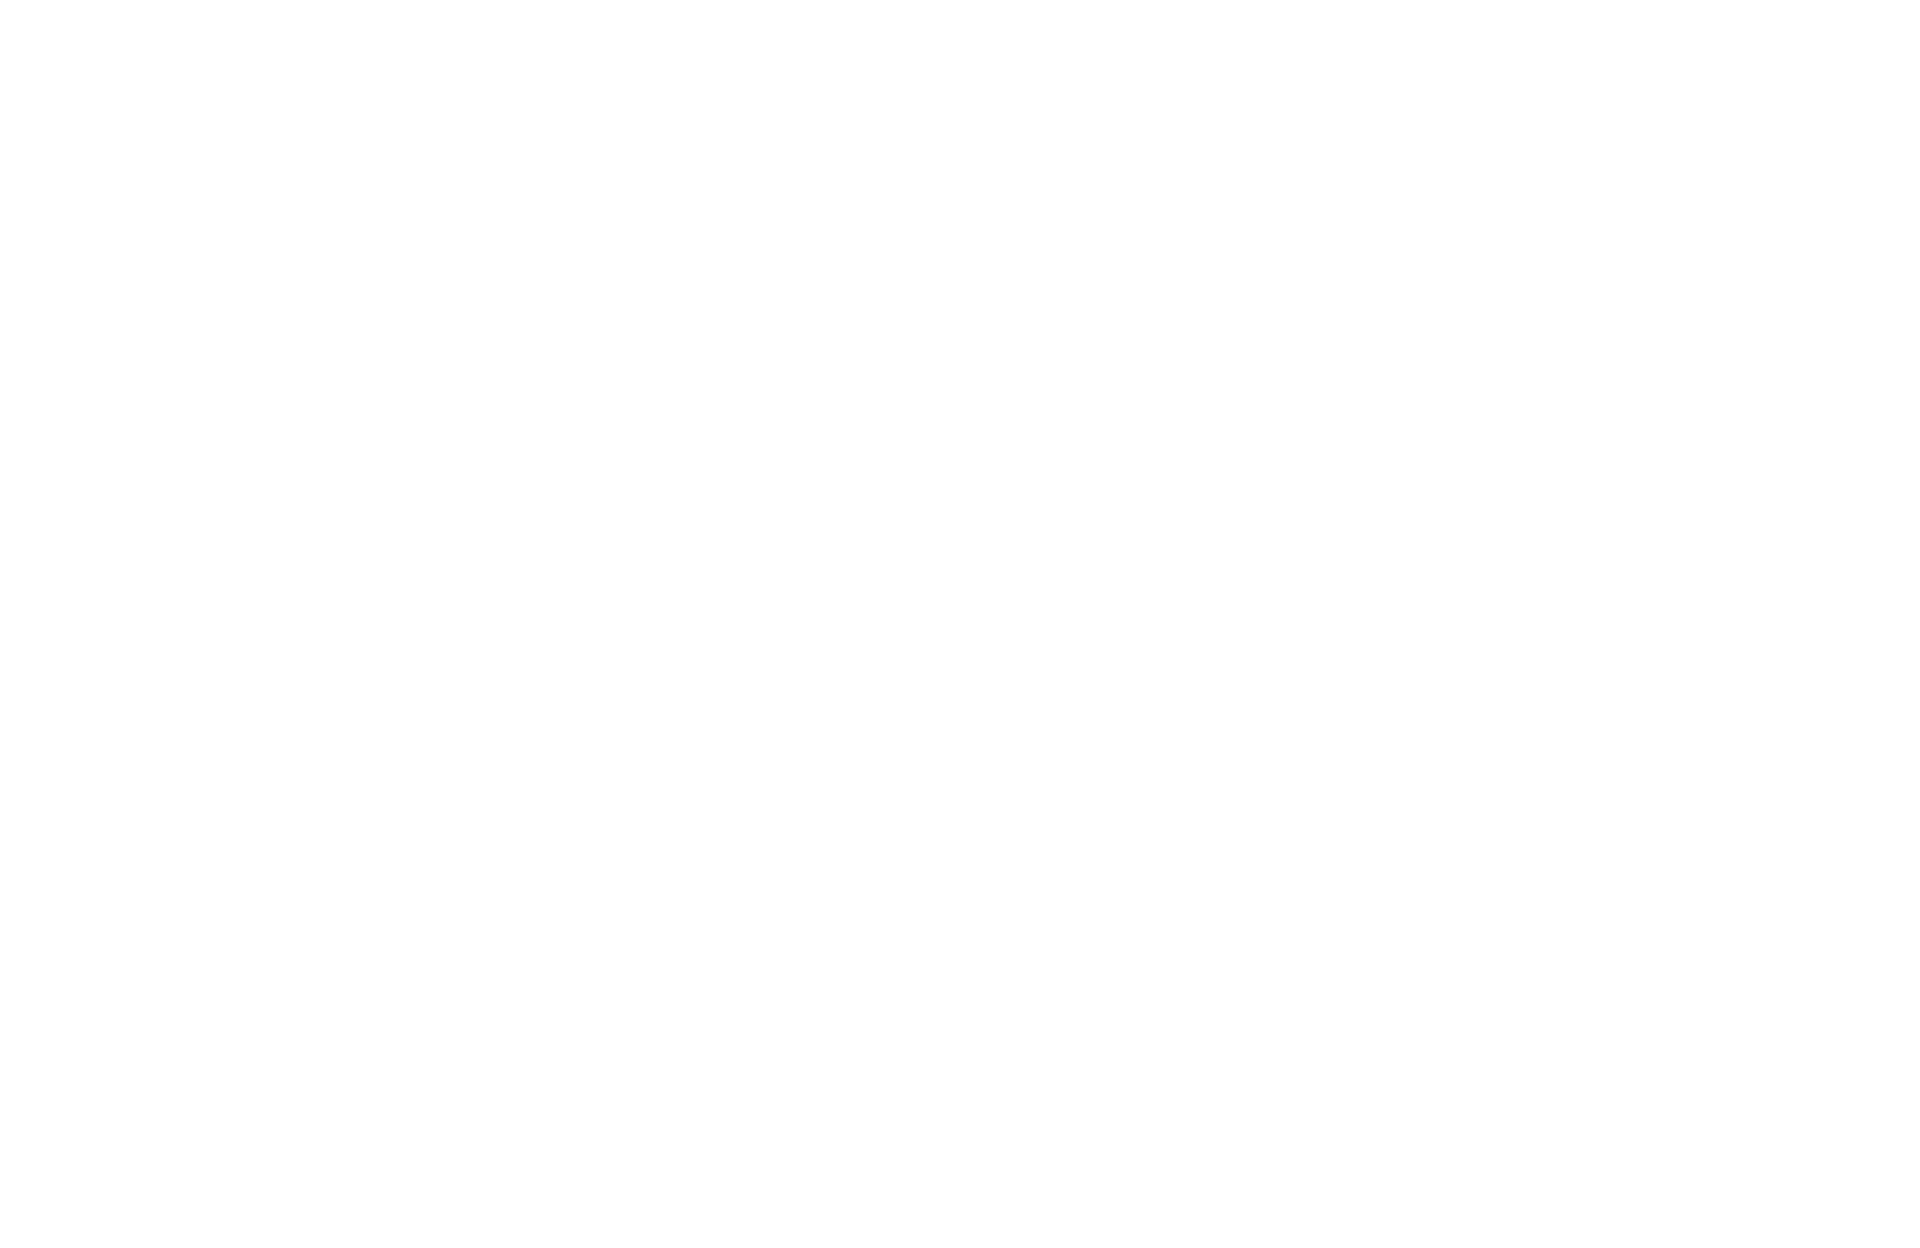 Upham Film Fest Emblem